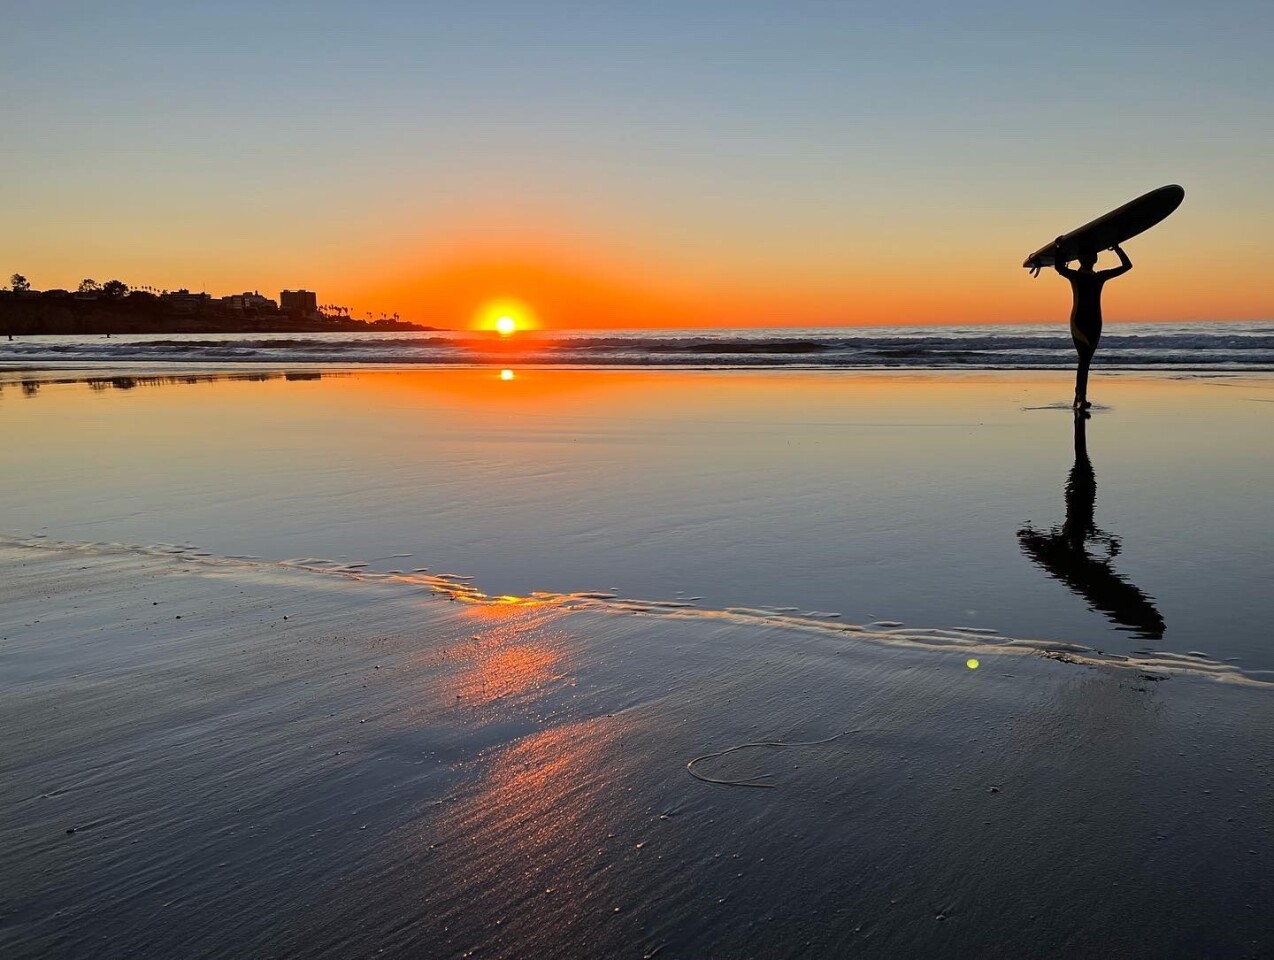 Sunset and a surfer at La Jolla Shores.